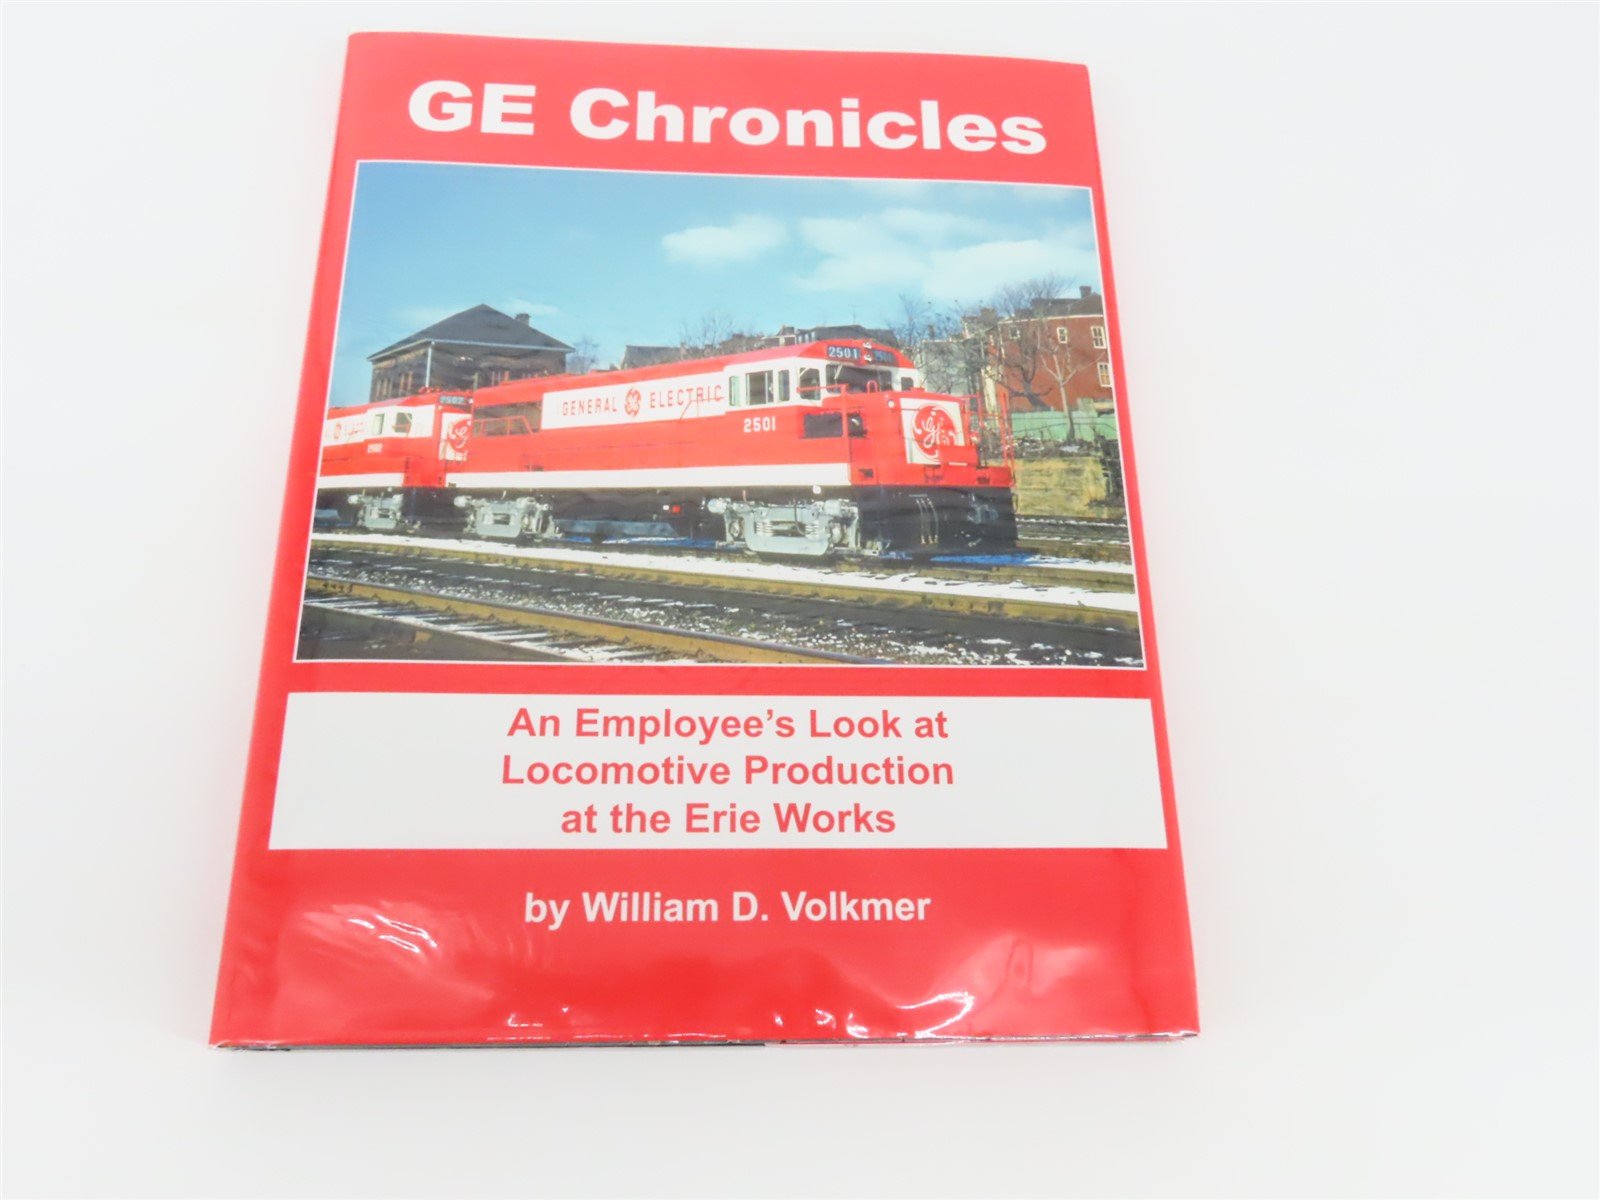 Morning Sun Books: GE Chronicles by William D. Volkmer ©2018 HC Book